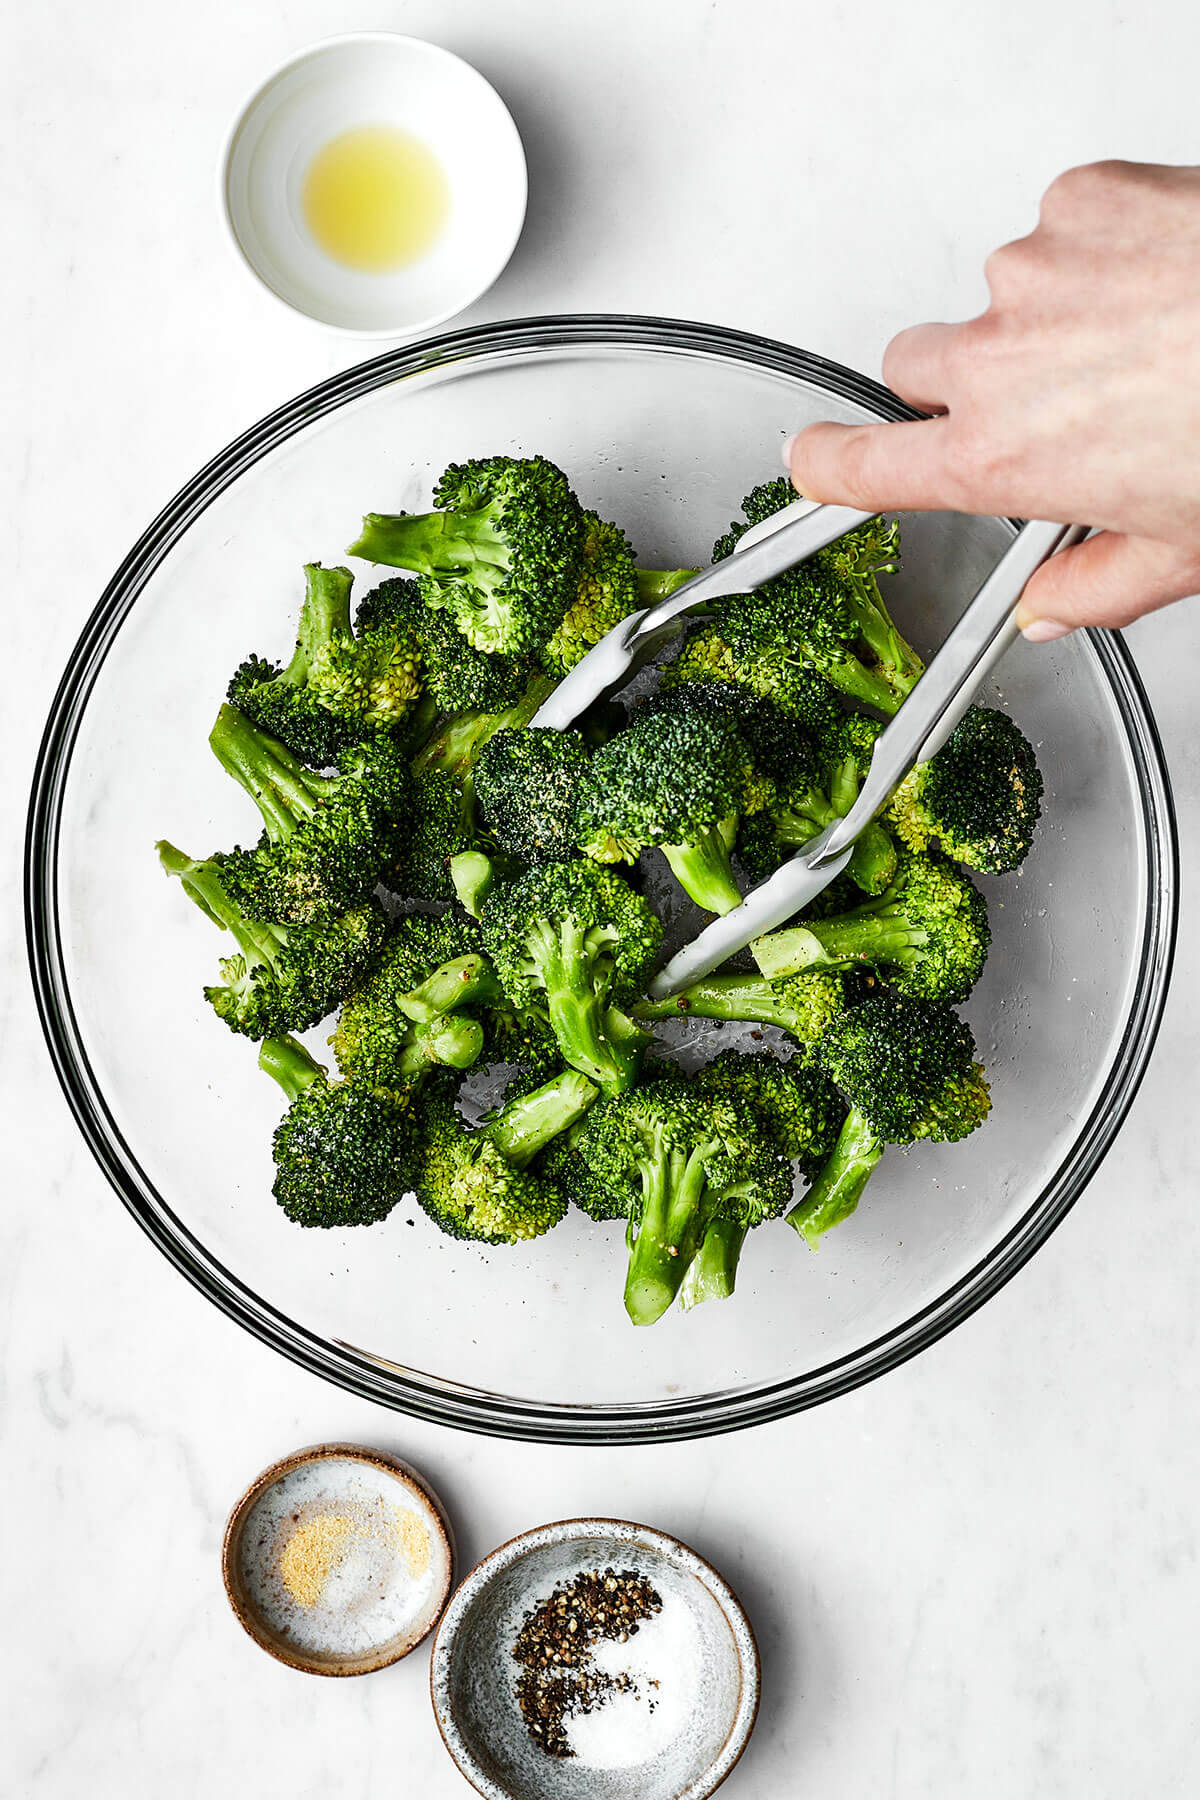 Tossing broccoli in seasoning before air frying